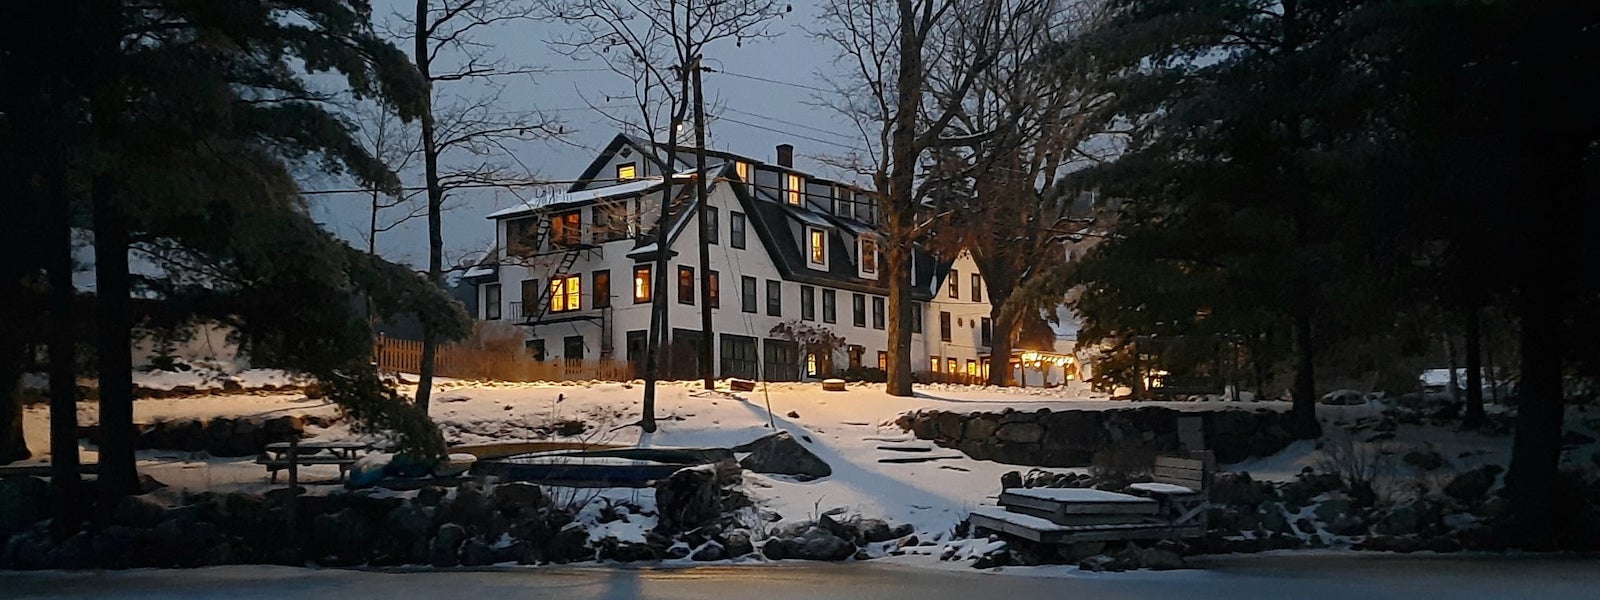 New Hampshire winter getaway: Follansbee Inn B&B